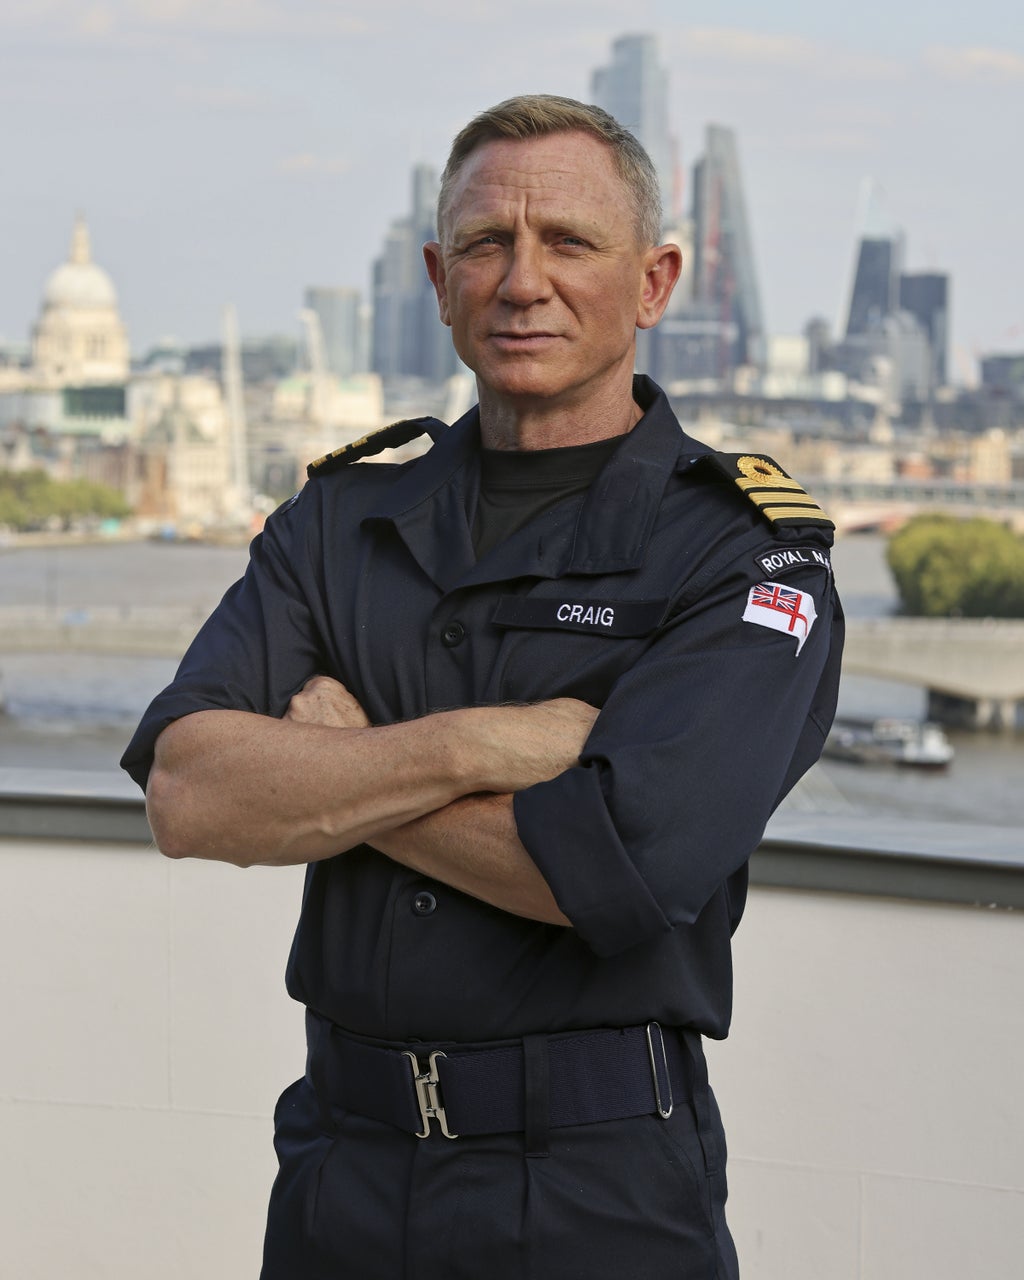 The name’s Bond, Commander Bond: Daniel Craig given honorary Royal Navy rank